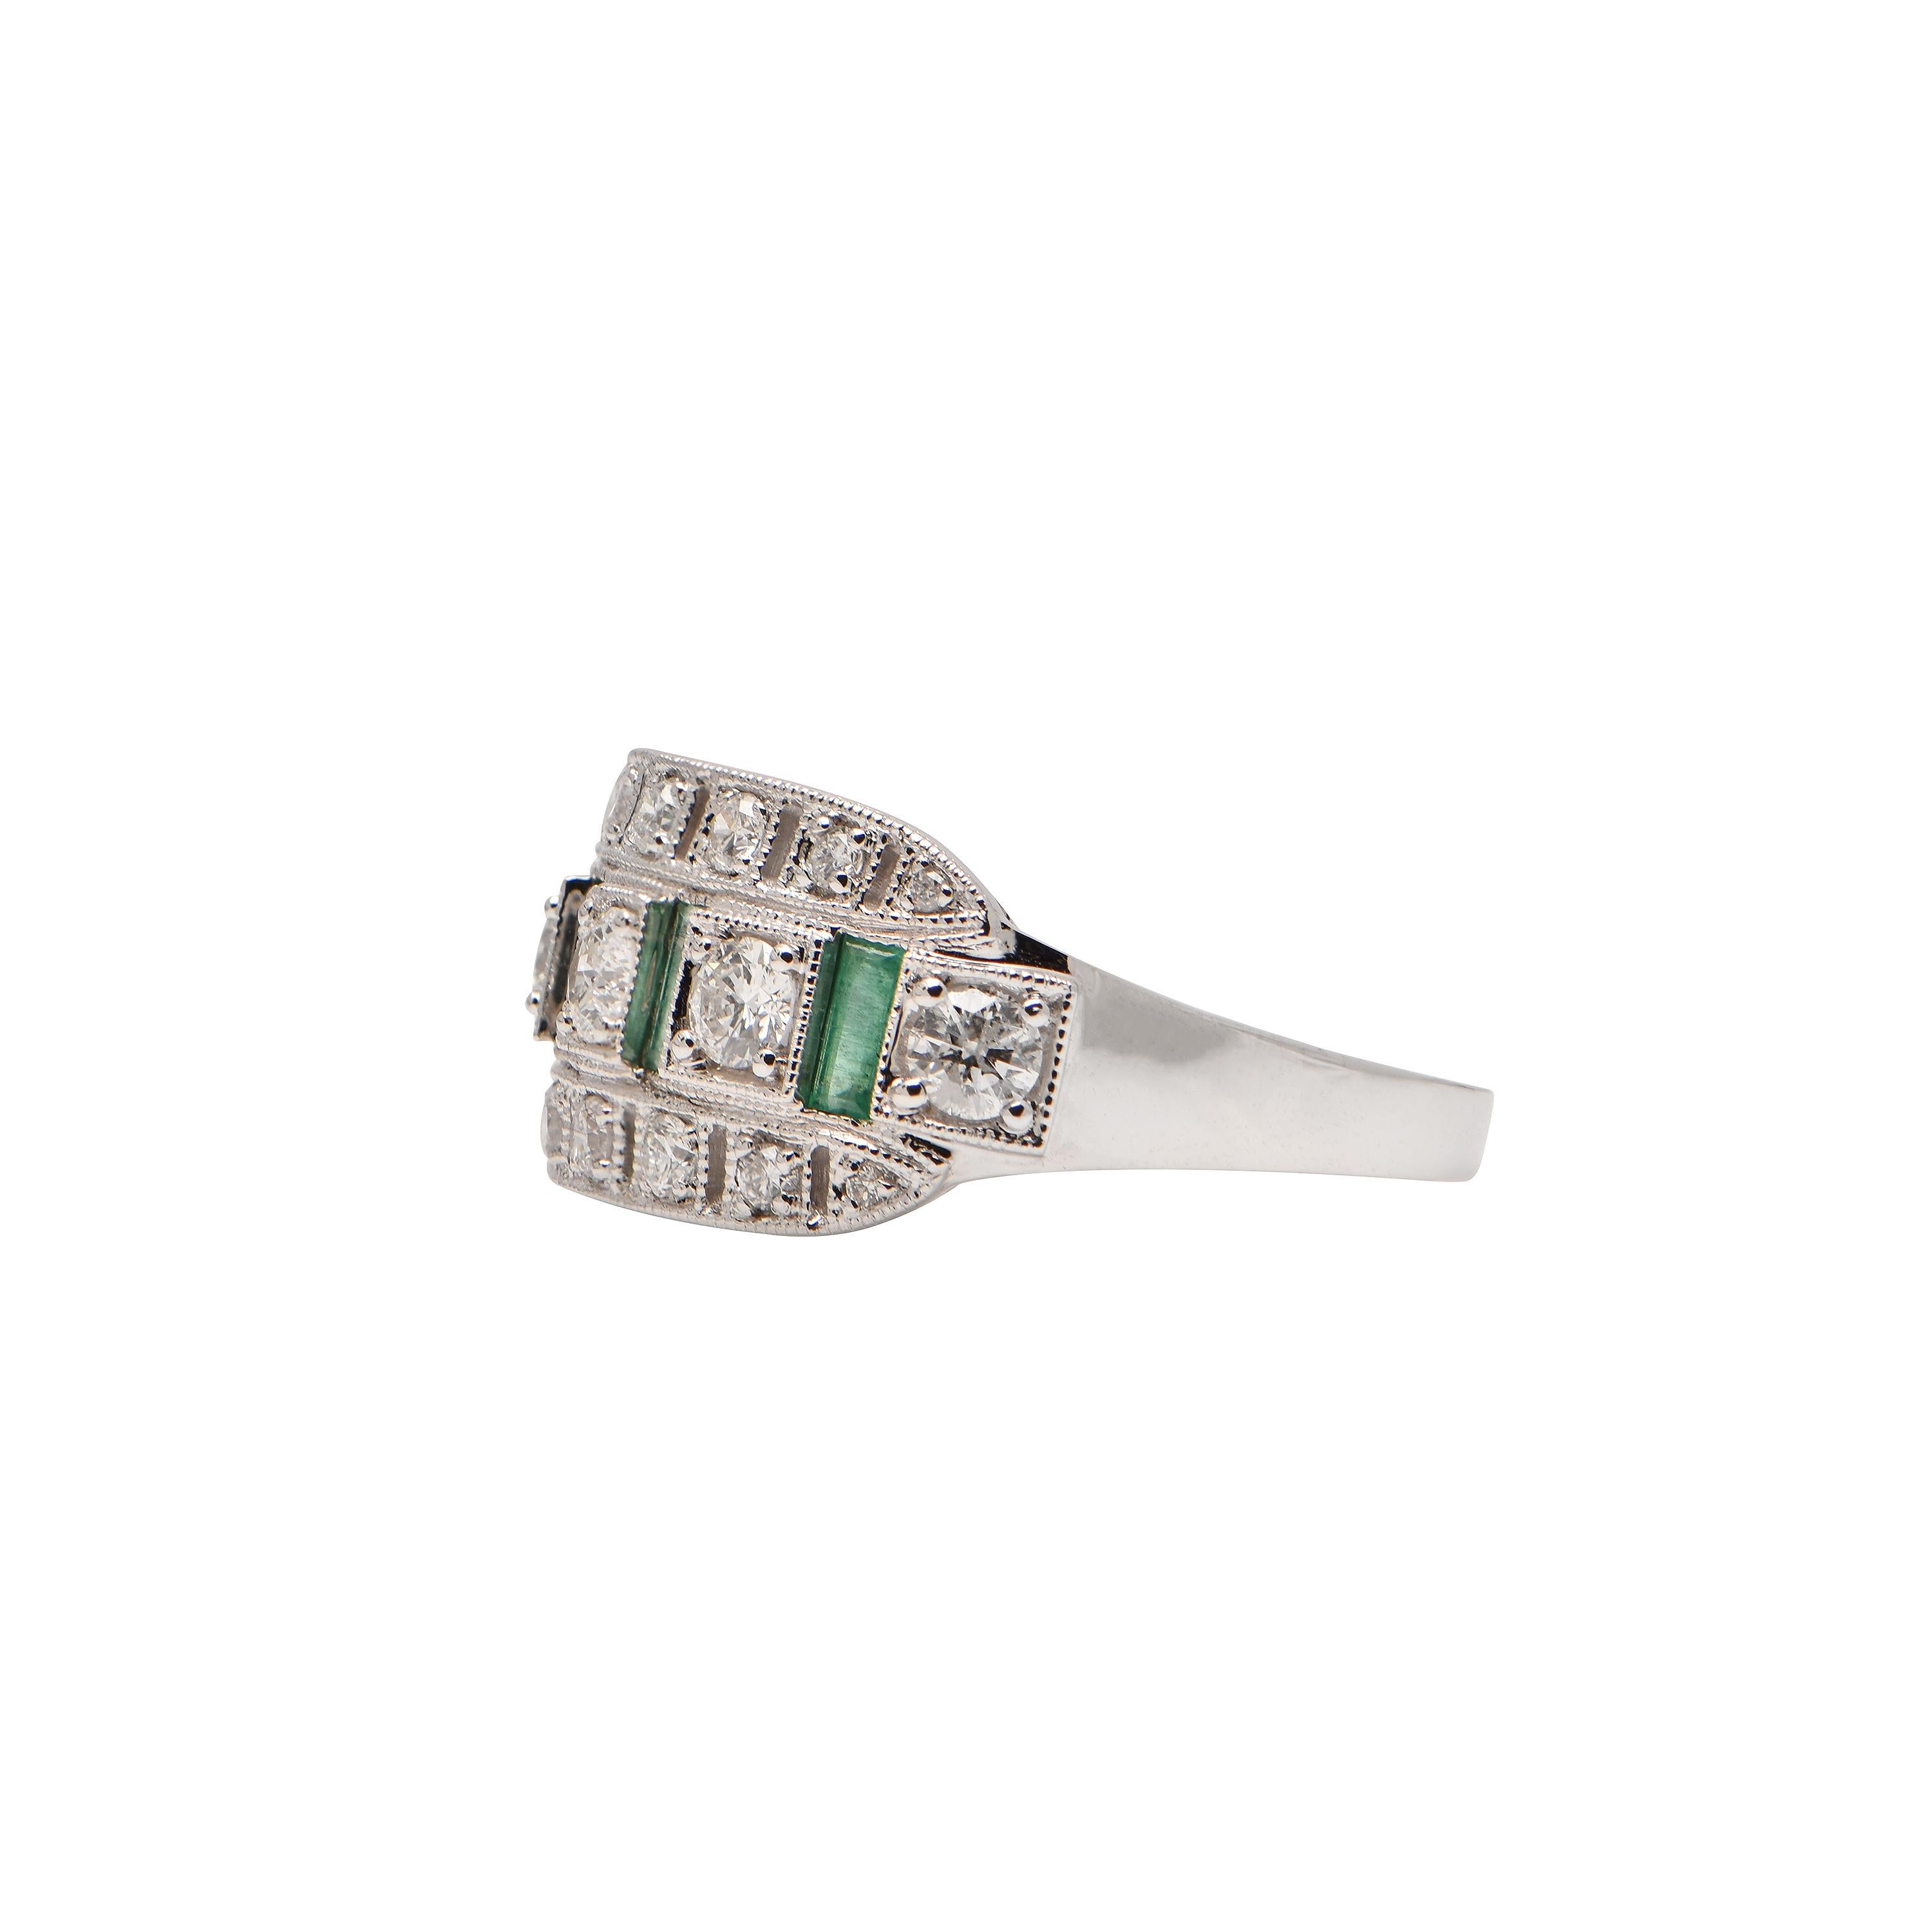 An 18ct White Gold Art Deco Dress Ring showcasing 4 Emeralds totalling 0.36ct, 5 Diamonds totalling 0.60ct, and 14 Diamonds totalling 0.27ct. Size M.
